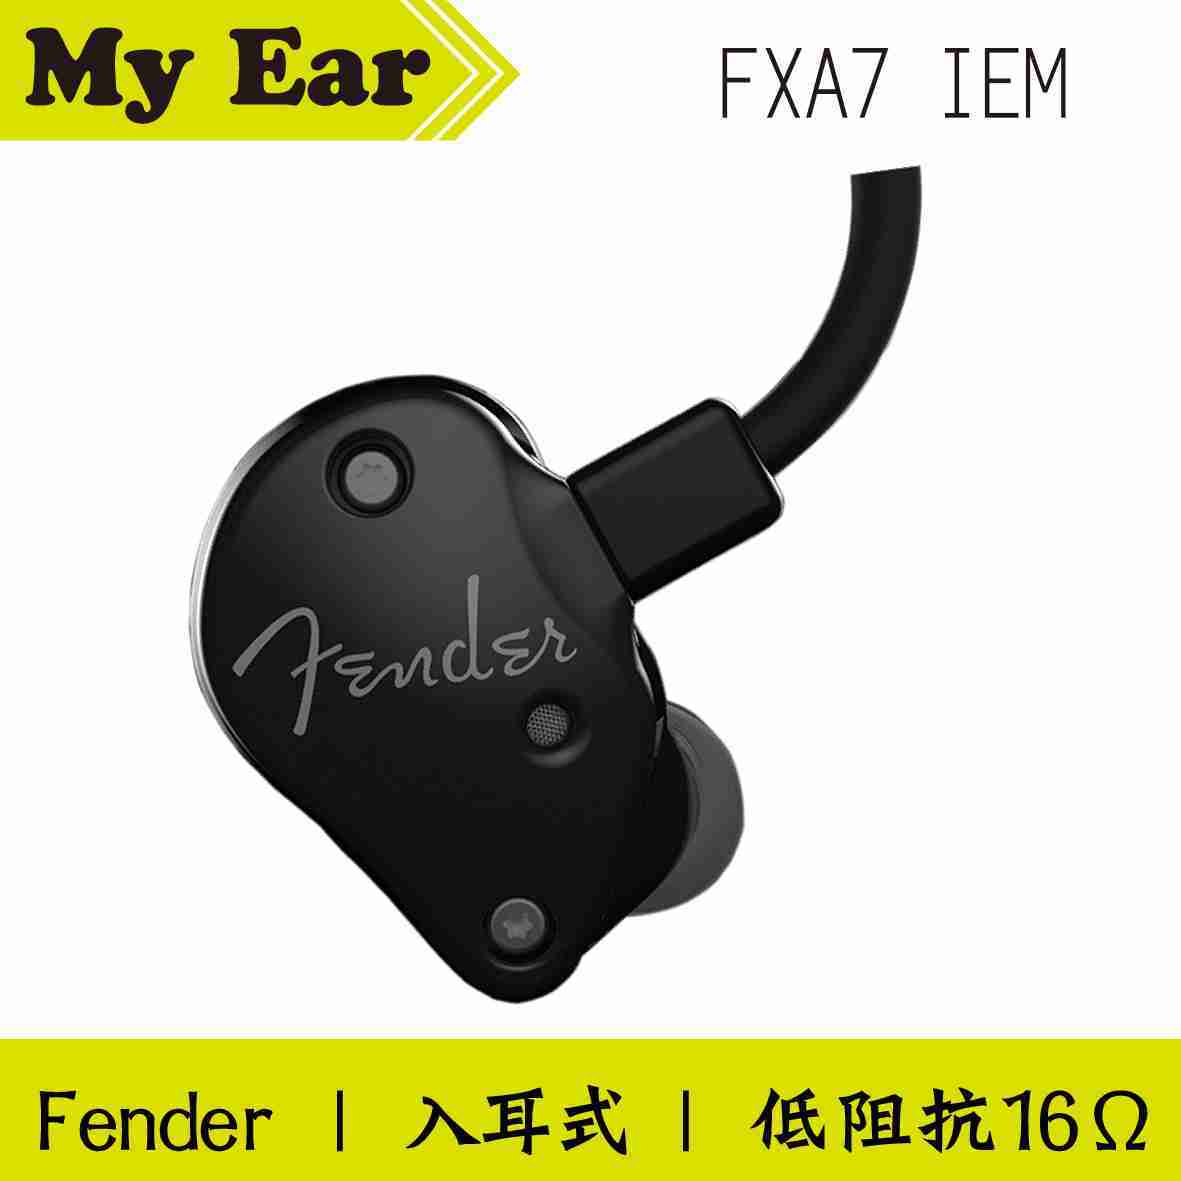 Fender FXA7 IEM 入耳式 監聽 耳機 黑色 | My Ear耳機專門店